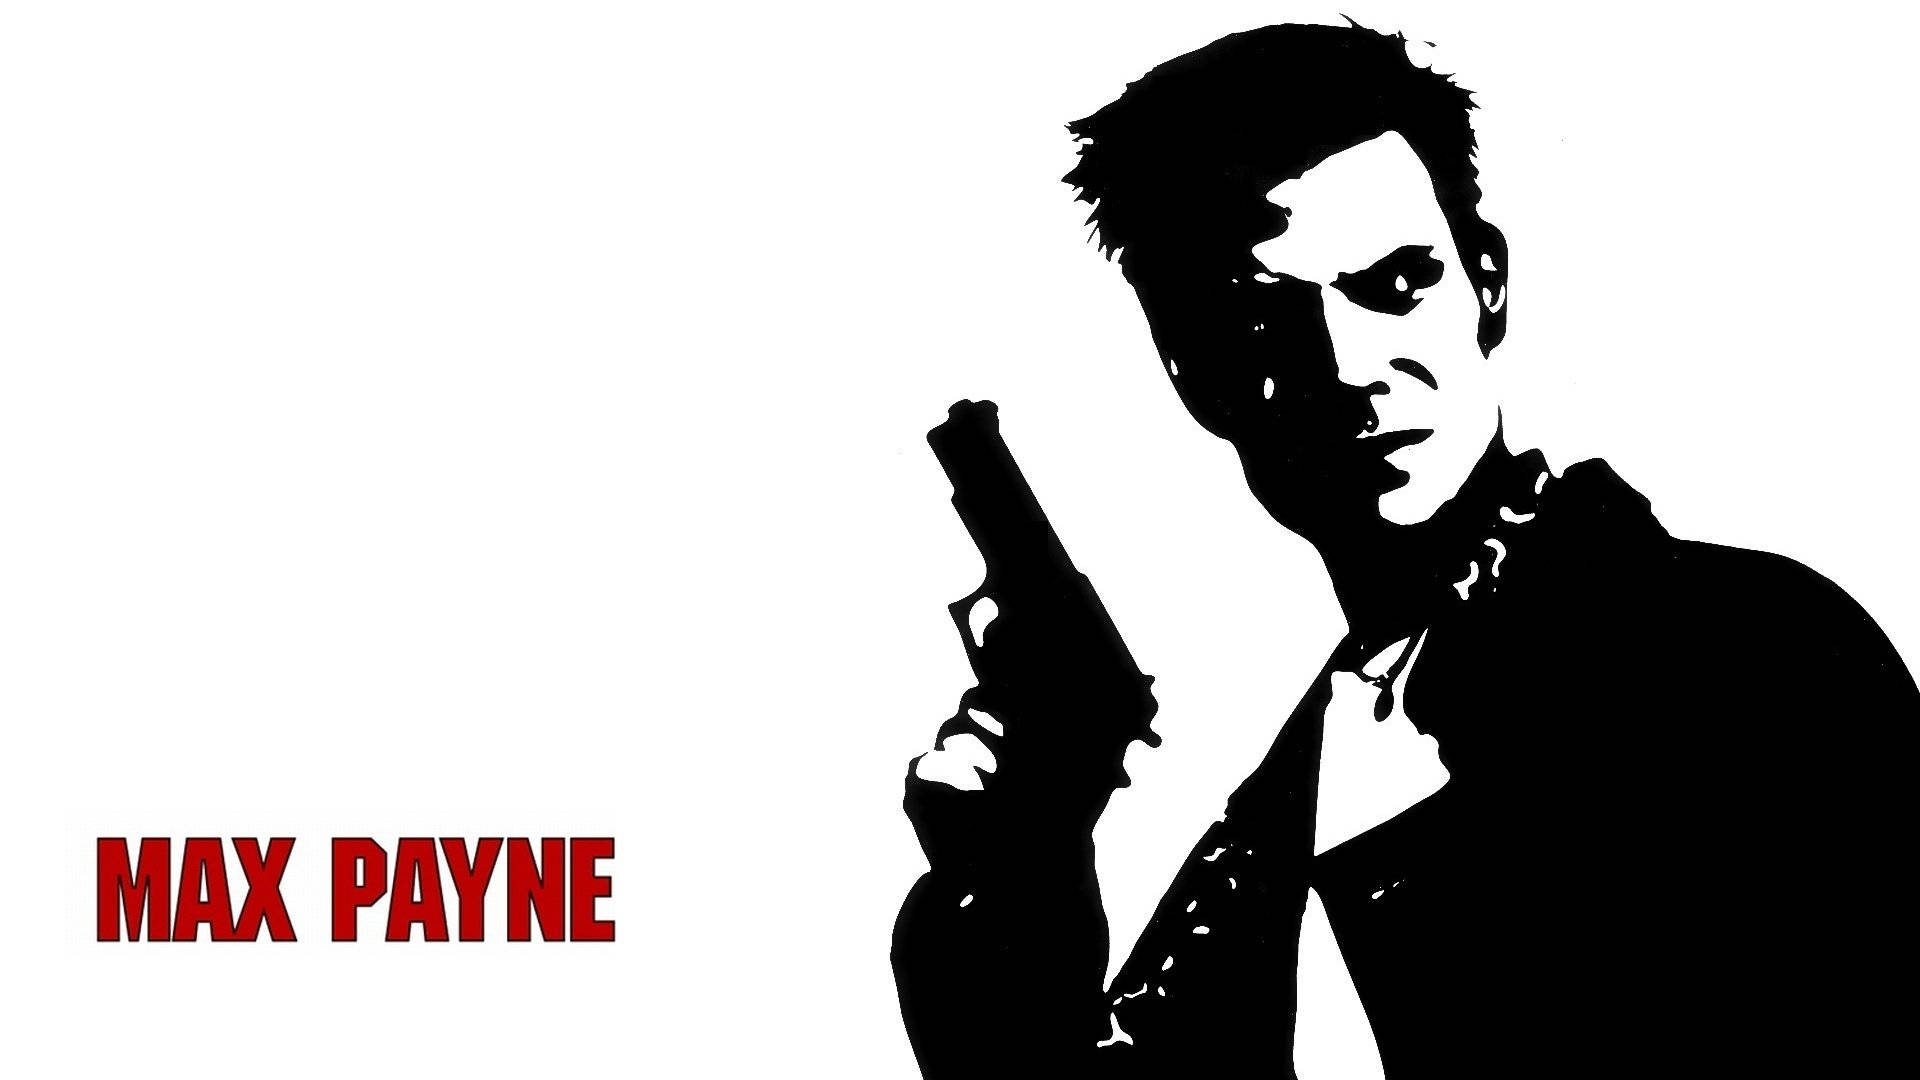 Max Payne Shadow Art Portrait Background